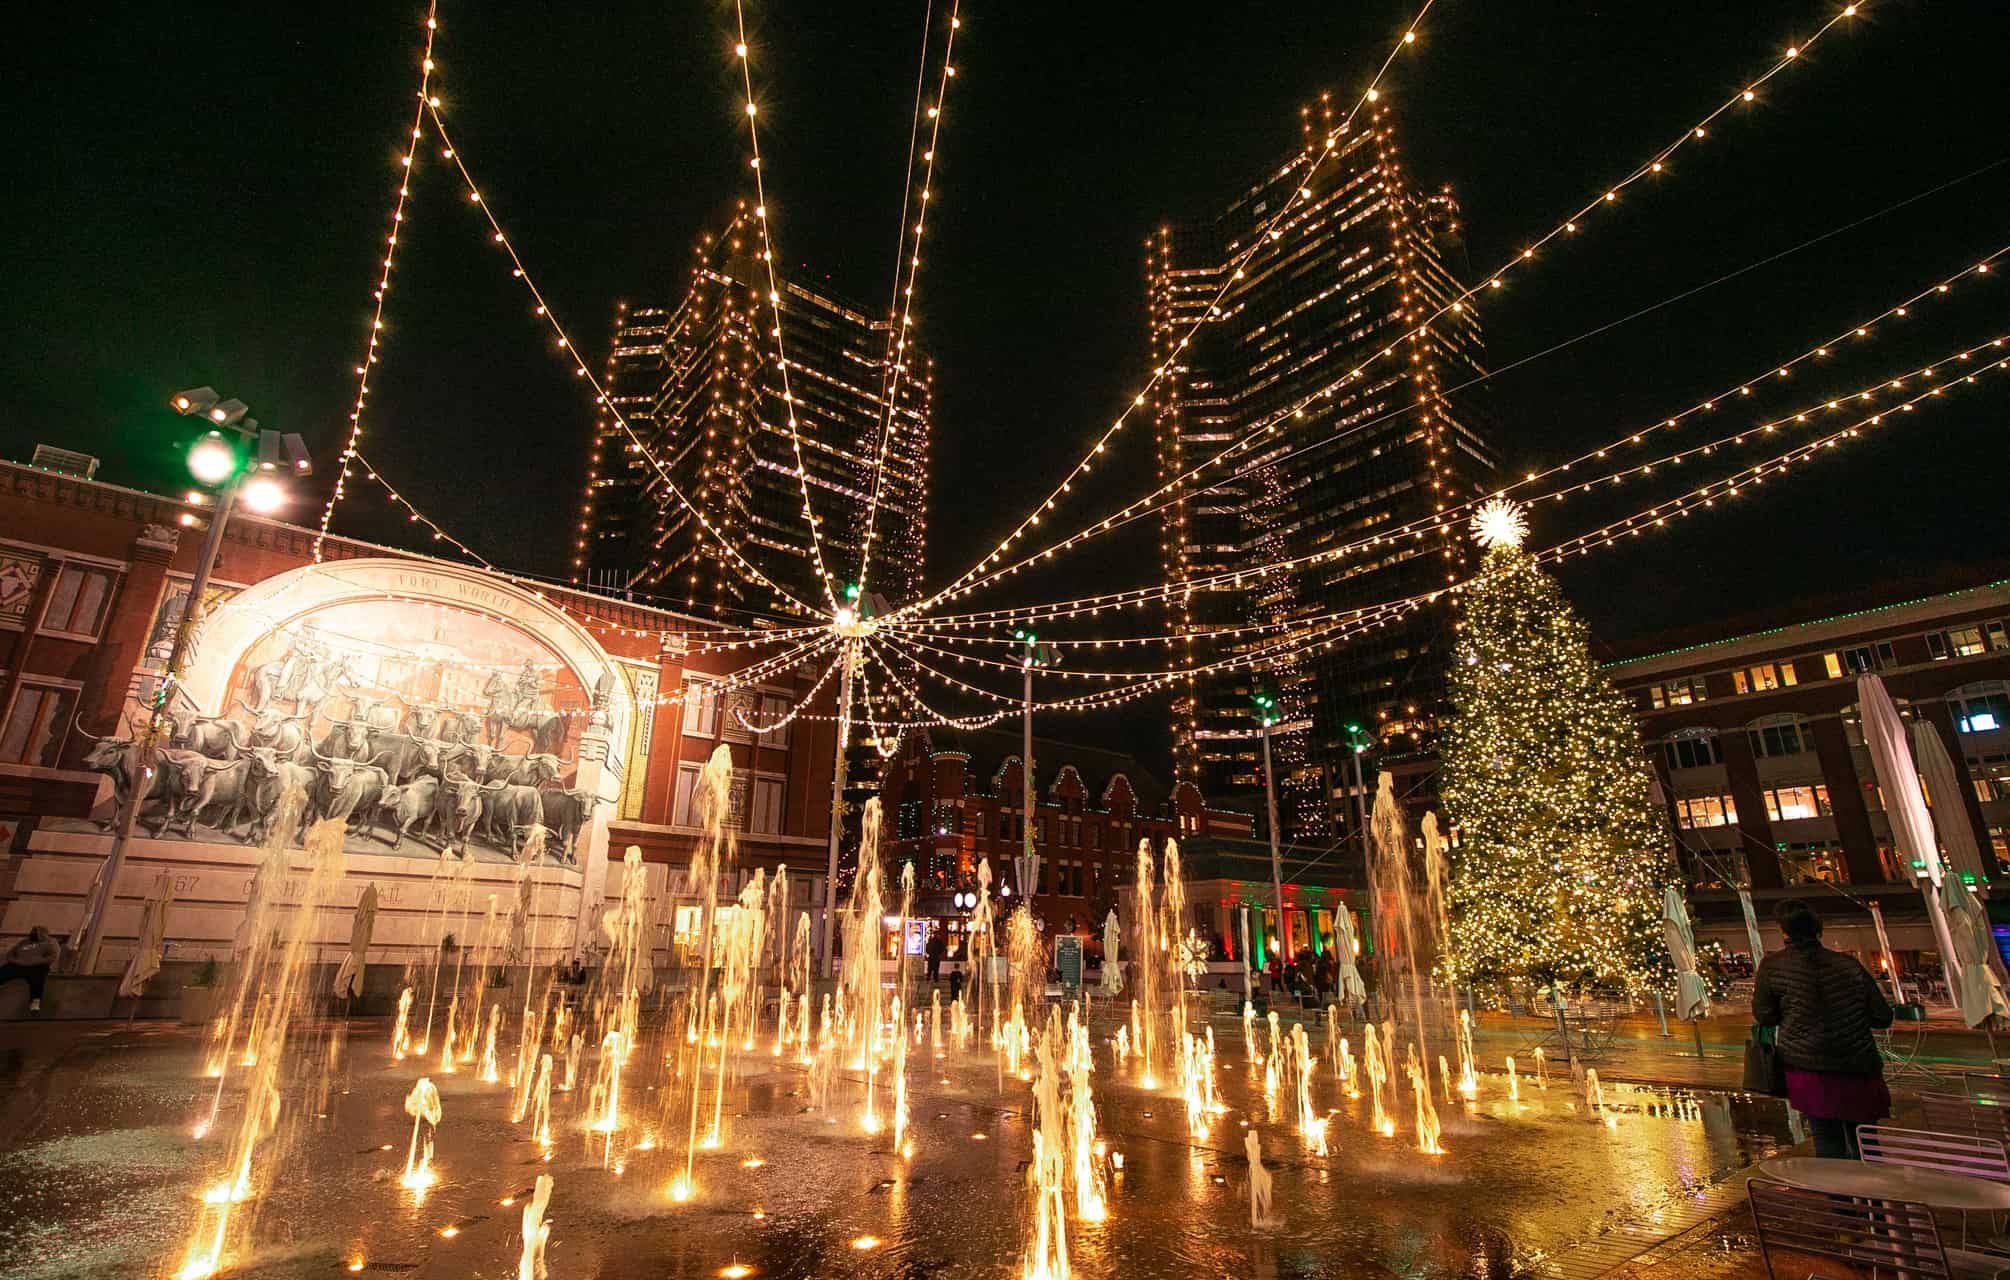 Sundance Square Fort Worth Christmas